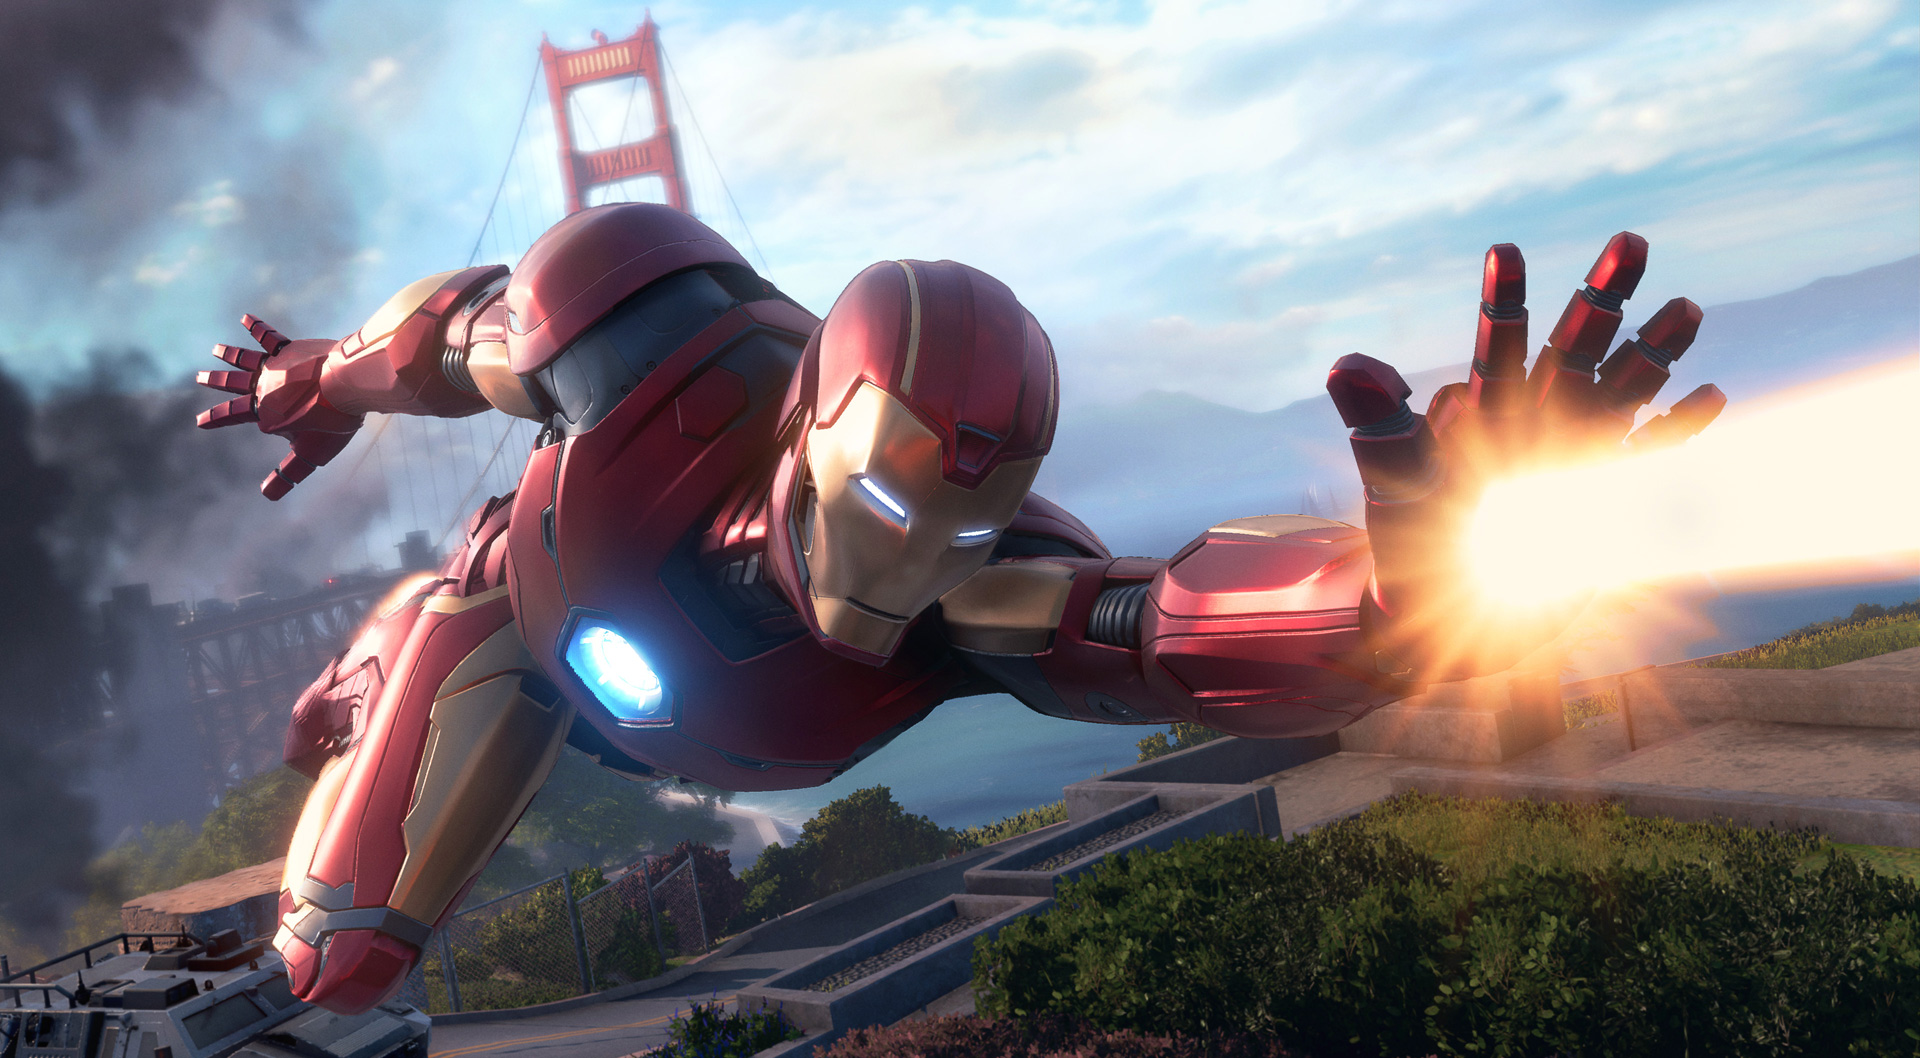 Marvel canceled an open world Iron Man game